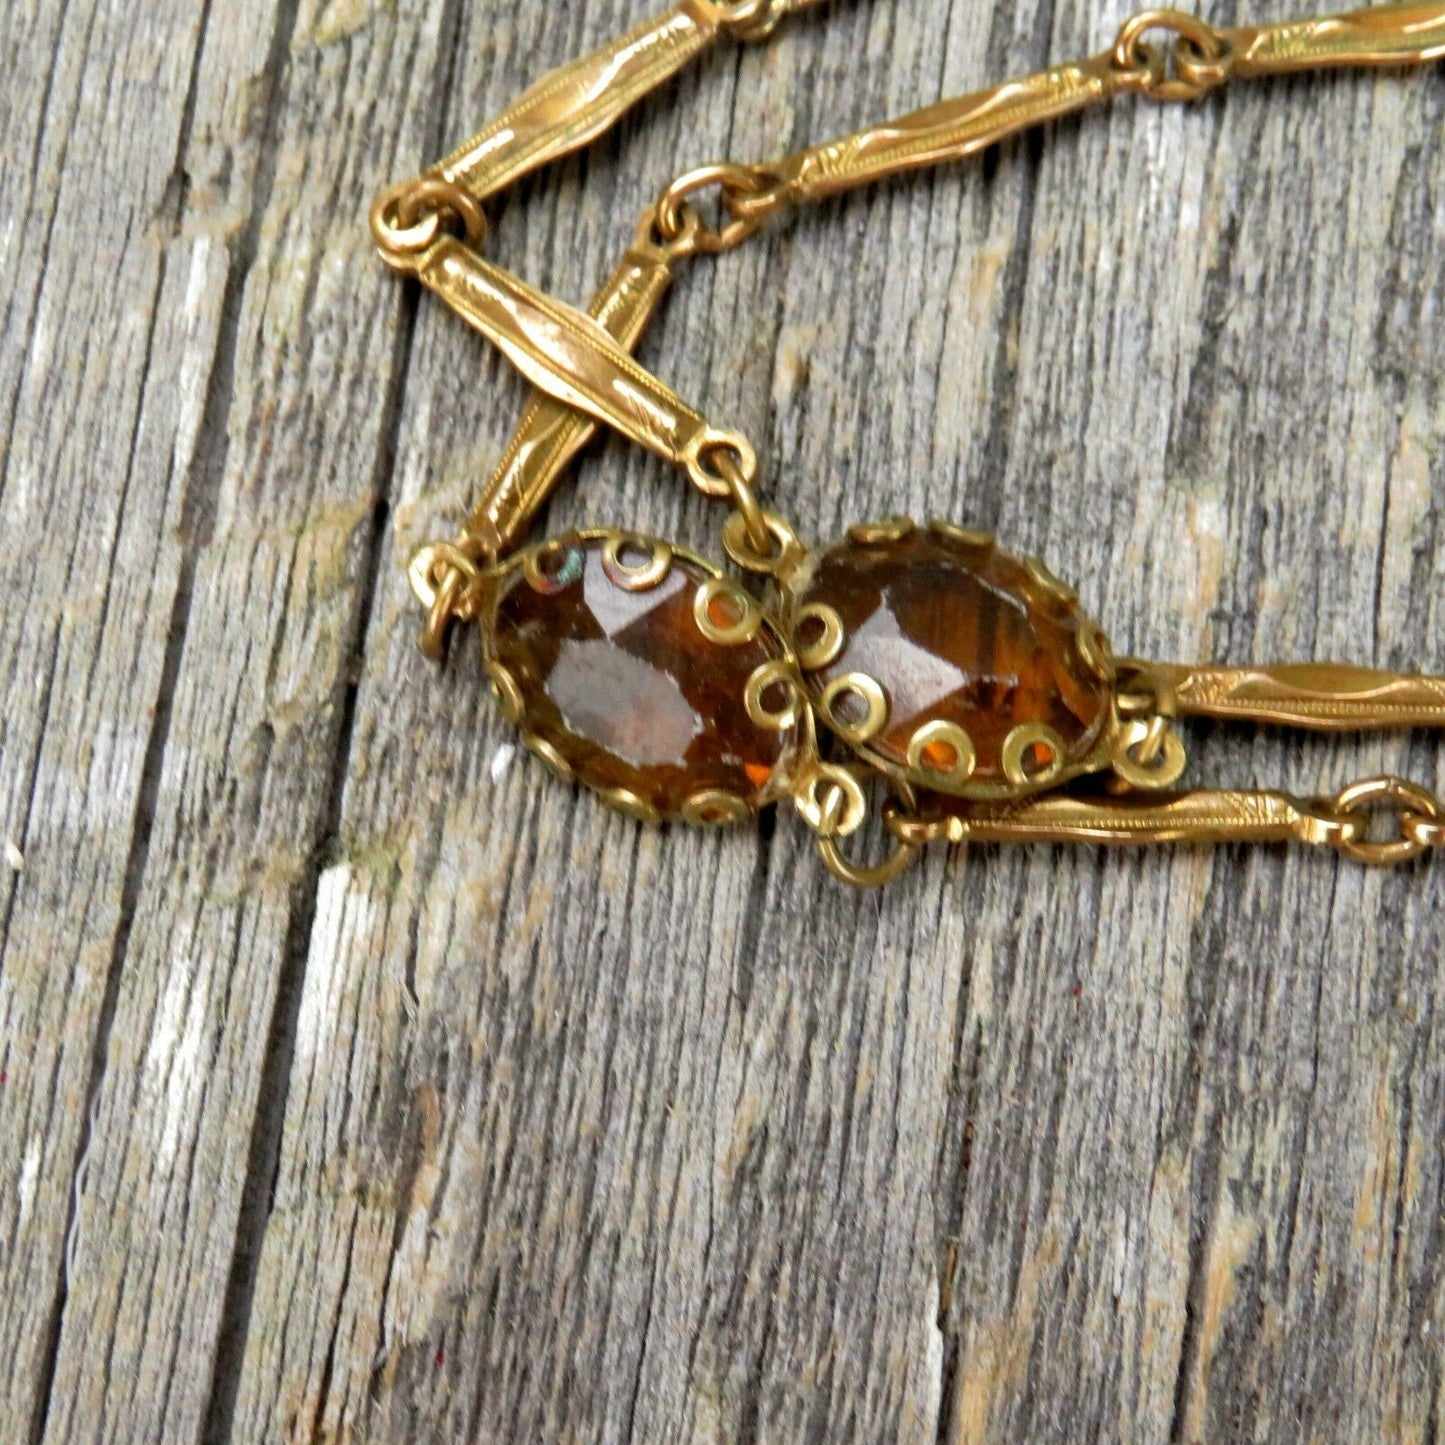 Vintage Rhinestone Necklace Tear Drop Amber Color Boho Gypsy Bohemian 60s Retro Jewelry - At Grandma's Table